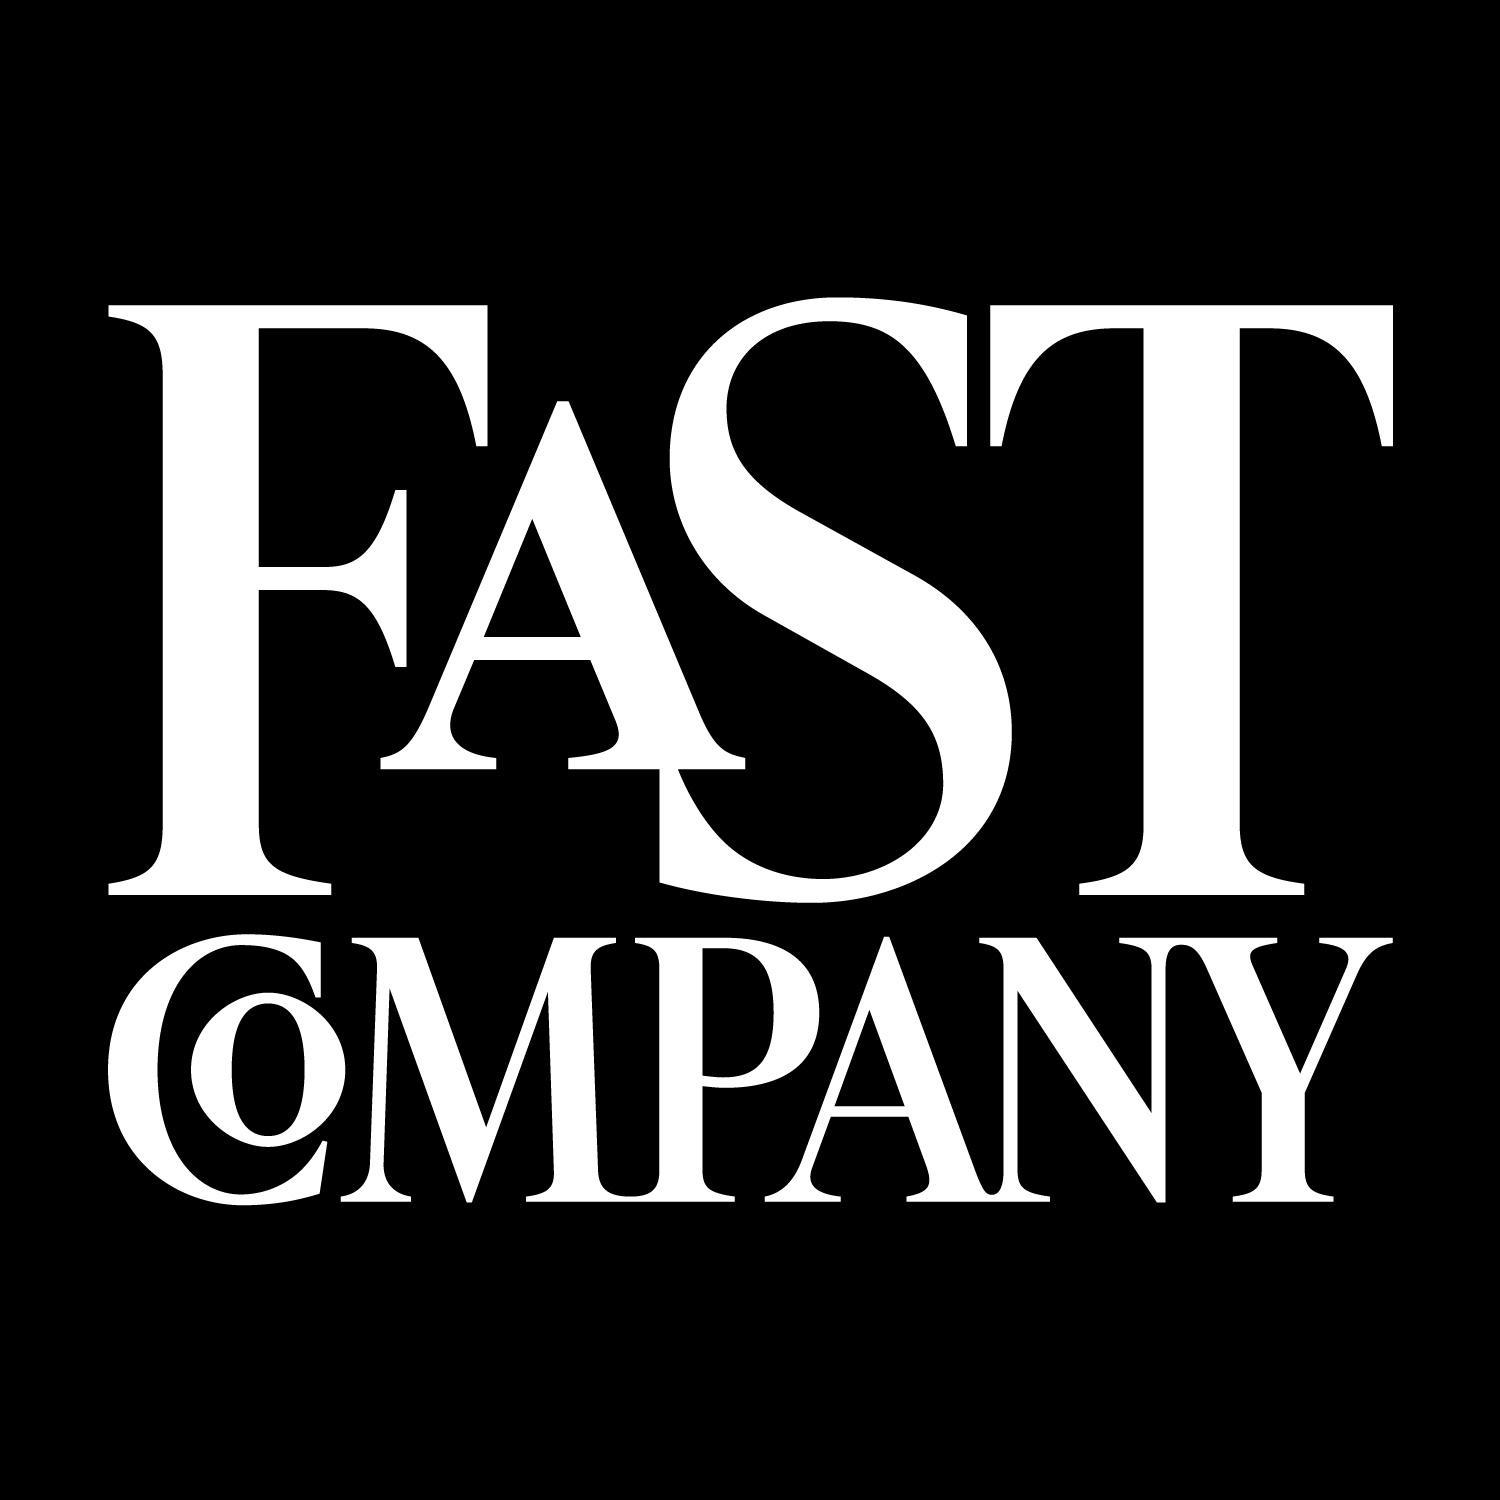 Fast Company logo square black